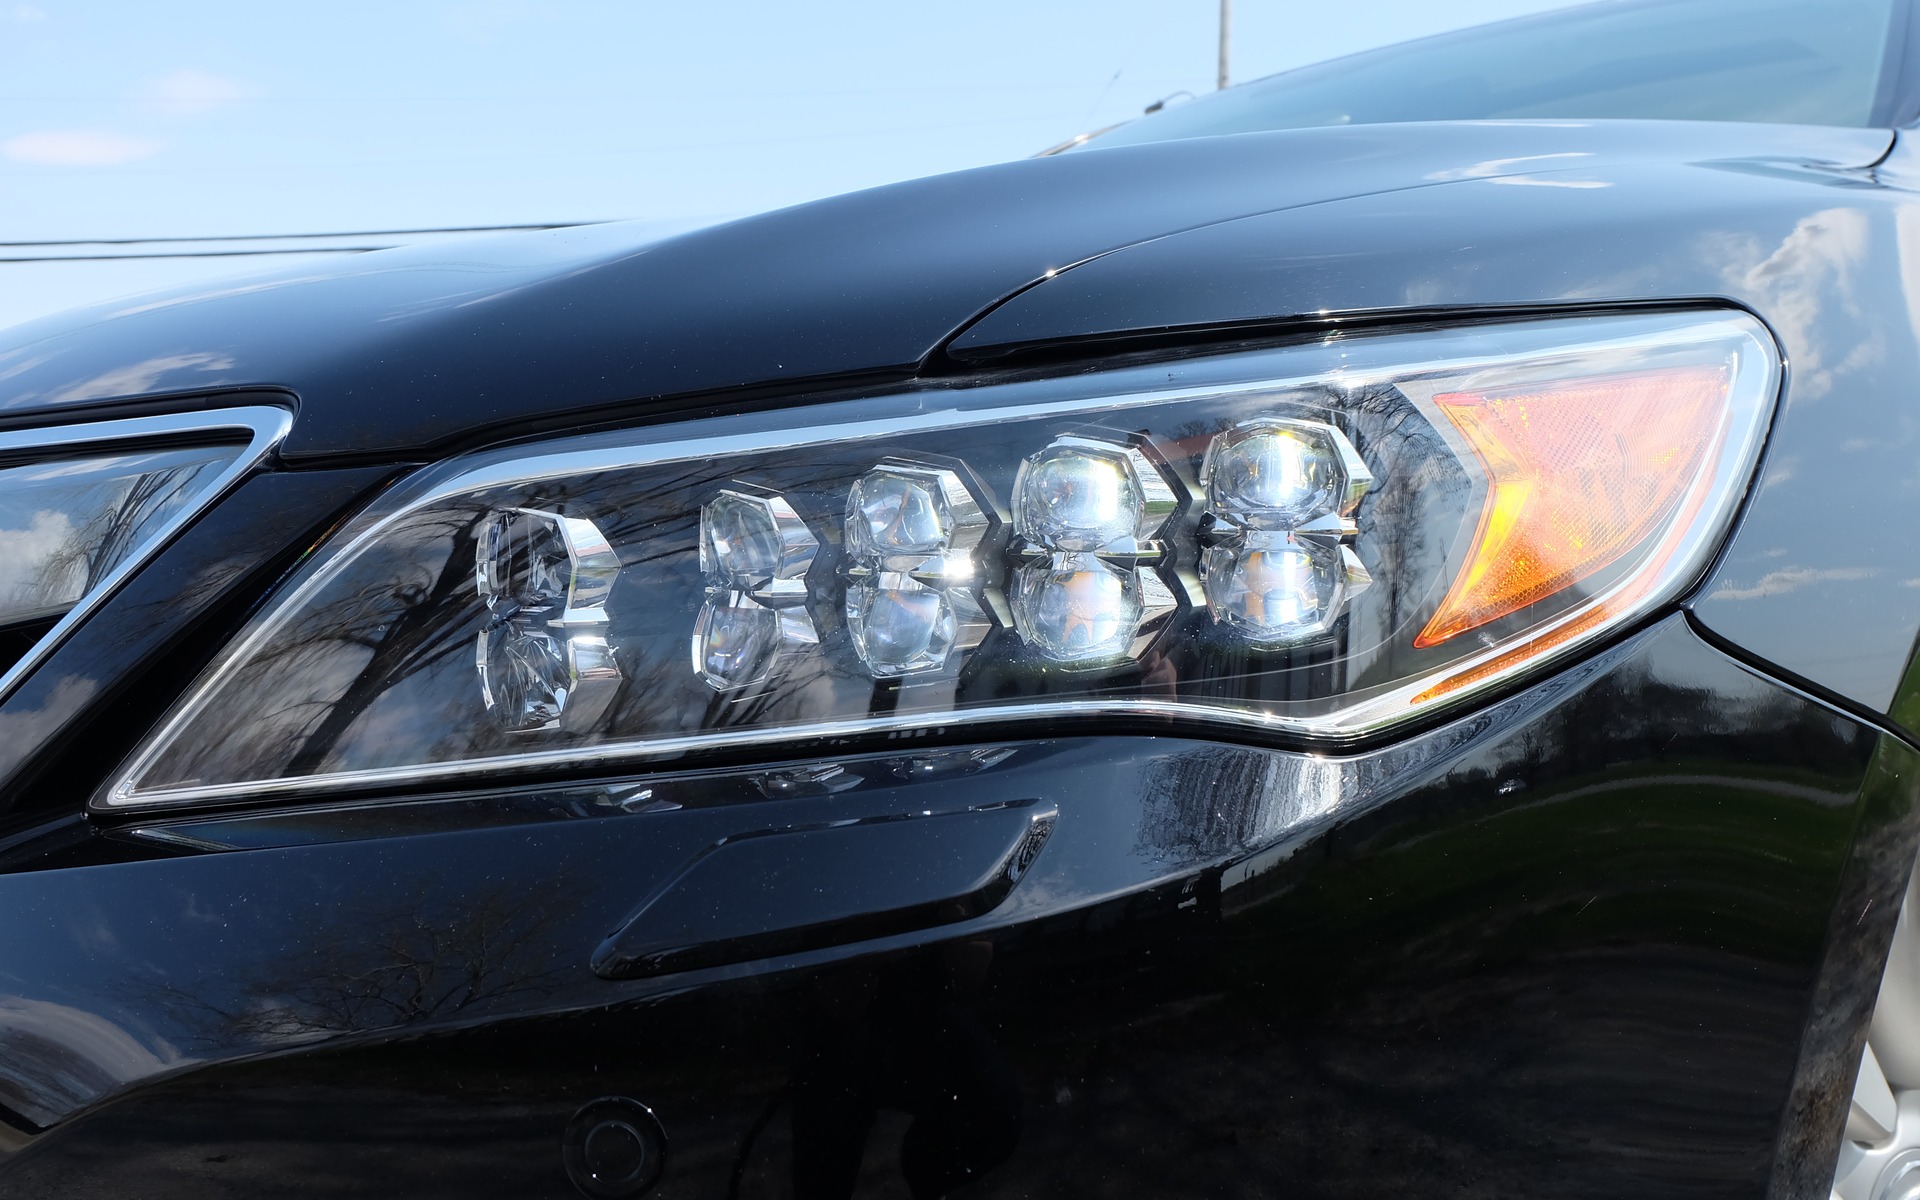 Acura's Jewel Eye headlights looks striking.